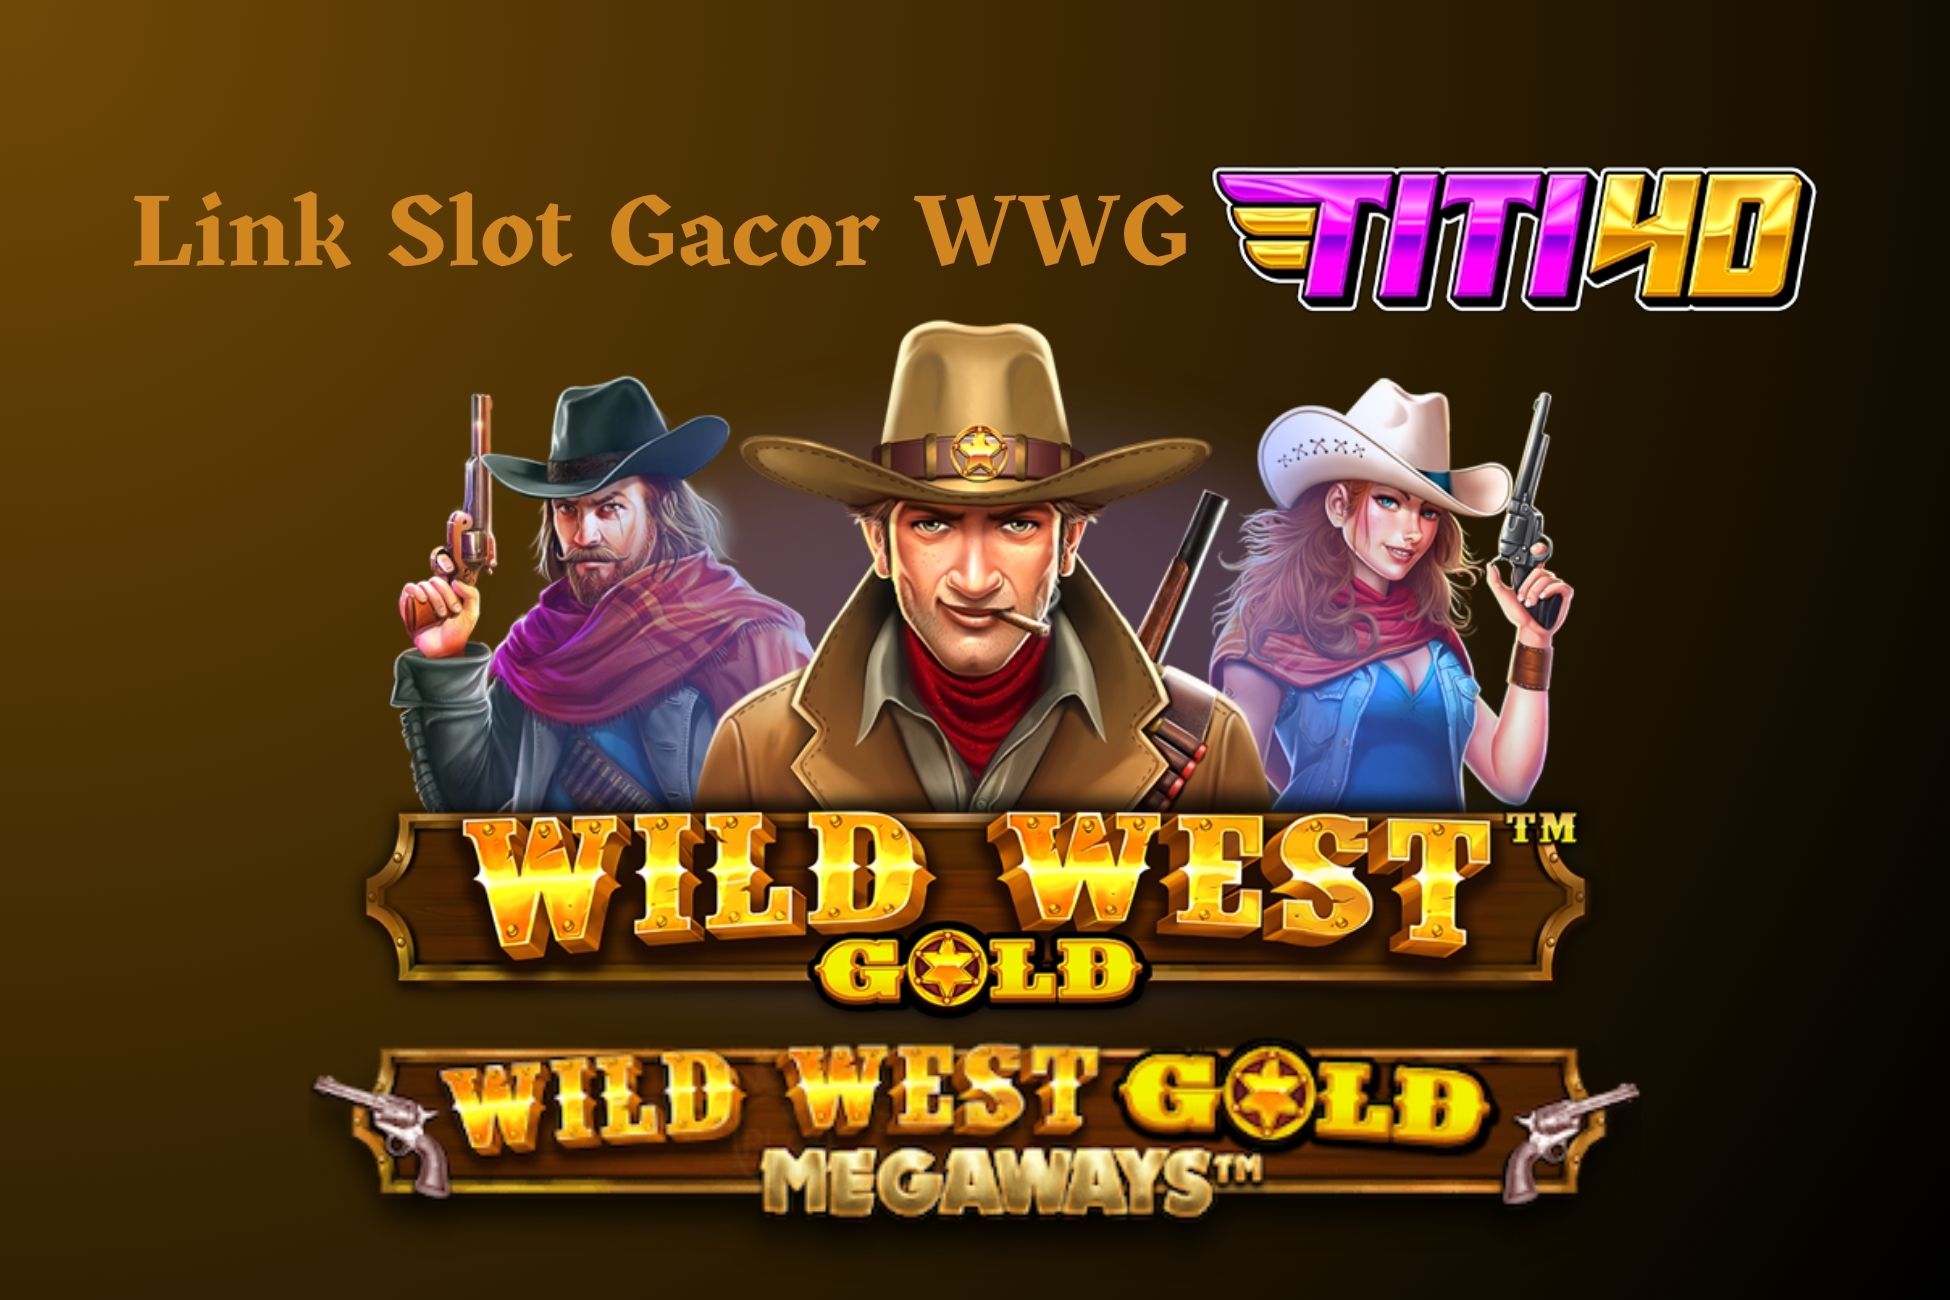 Link Slot Gacor WWG TITI4D